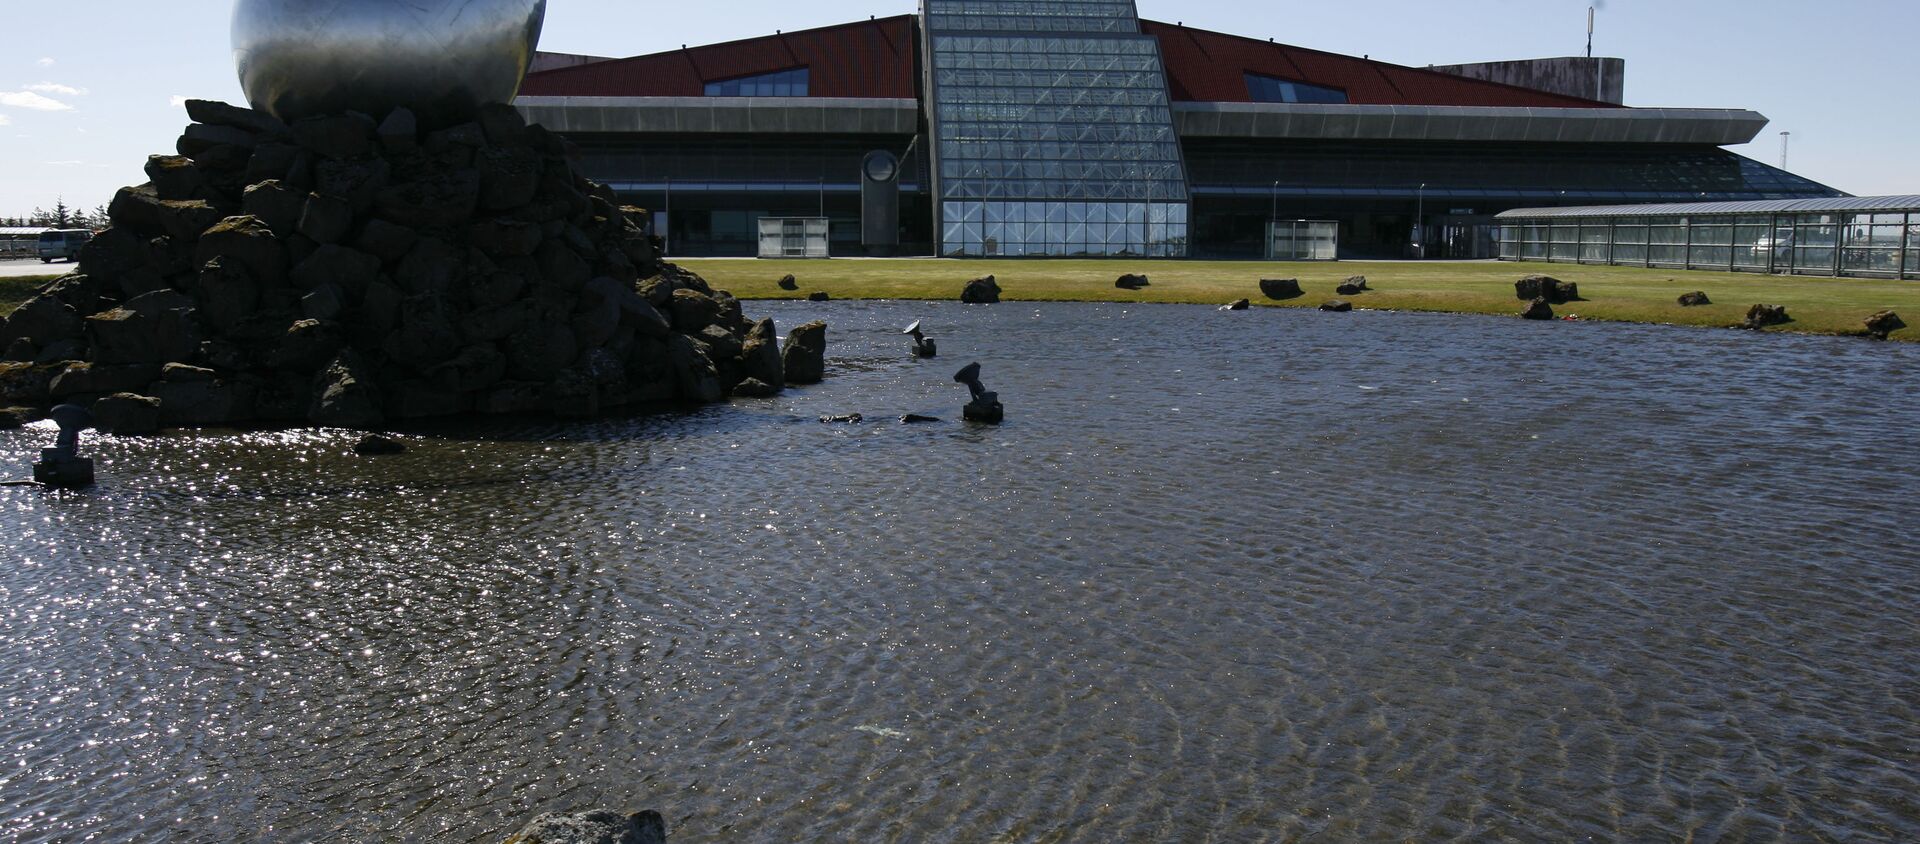 A general view of the exterior of Keflavik airport, Keflavik, Iceland  - Sputnik International, 1920, 18.03.2021